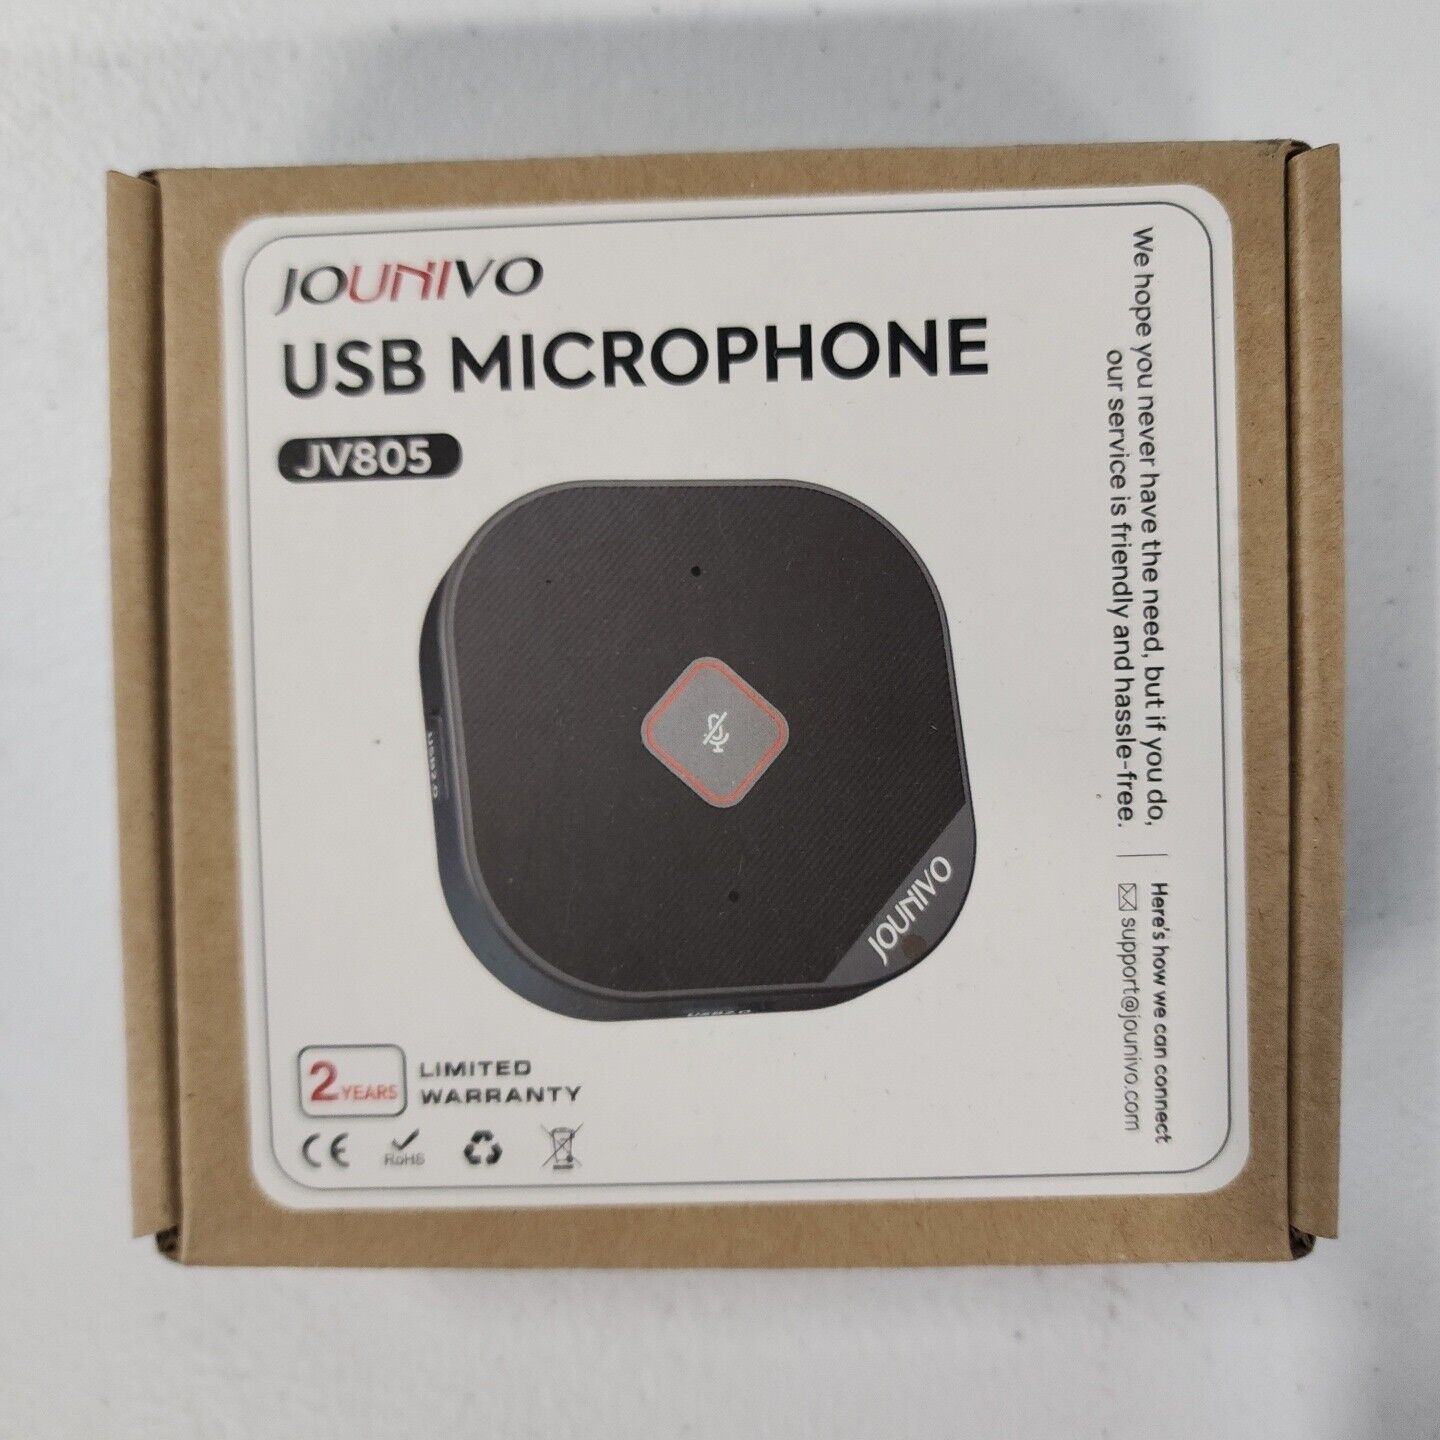 Jounivo USB Microphone JV805 2-port USB 0.3 hub 360